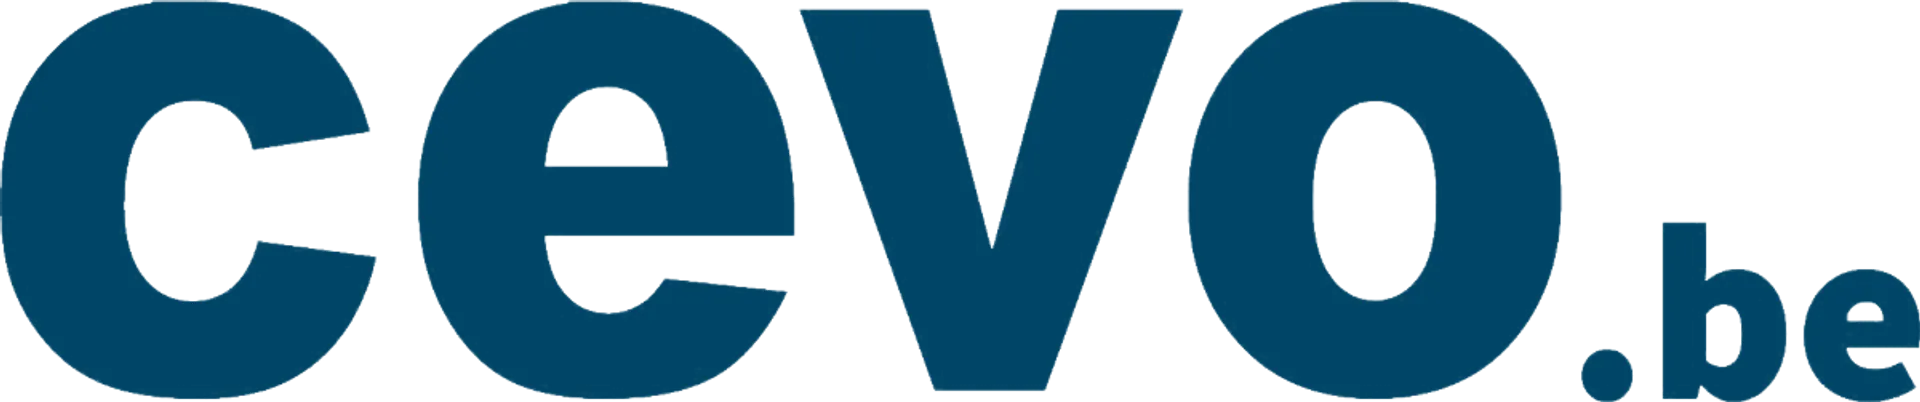 CEVO logo in de folder van deze week